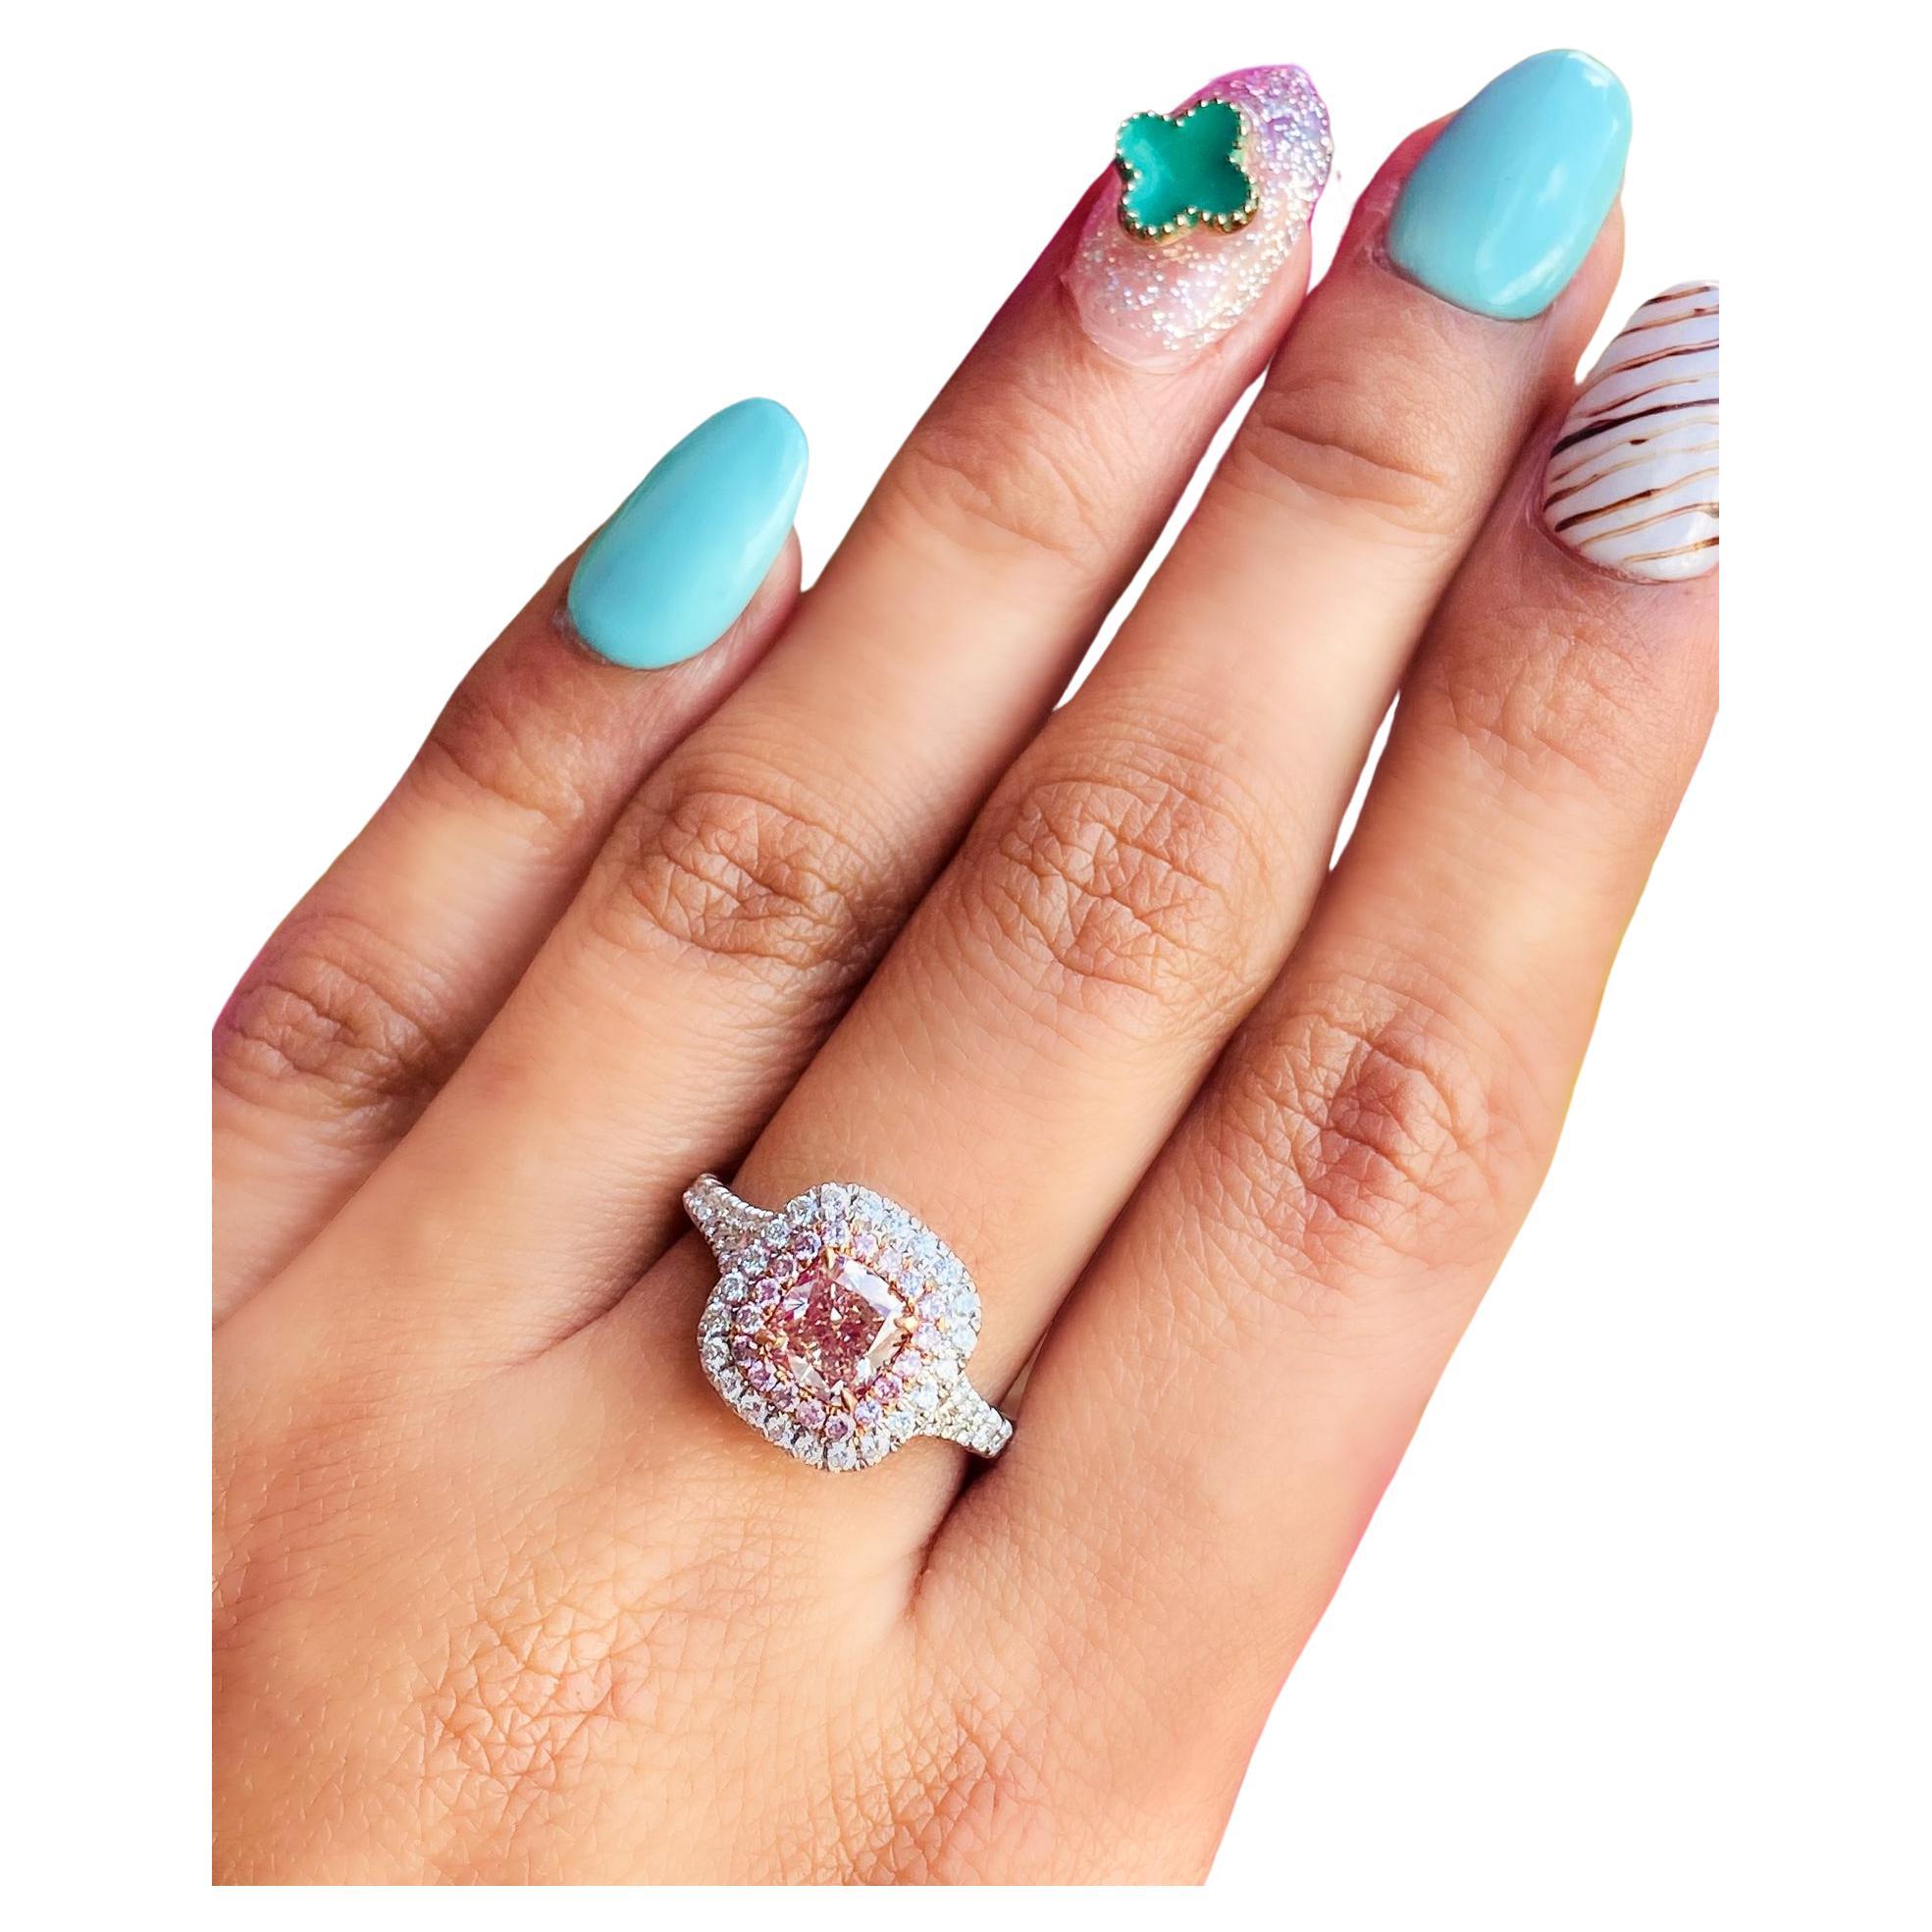 AGL Certified 1.00 Carat Fancy Pink Diamond Ring VS Clarity